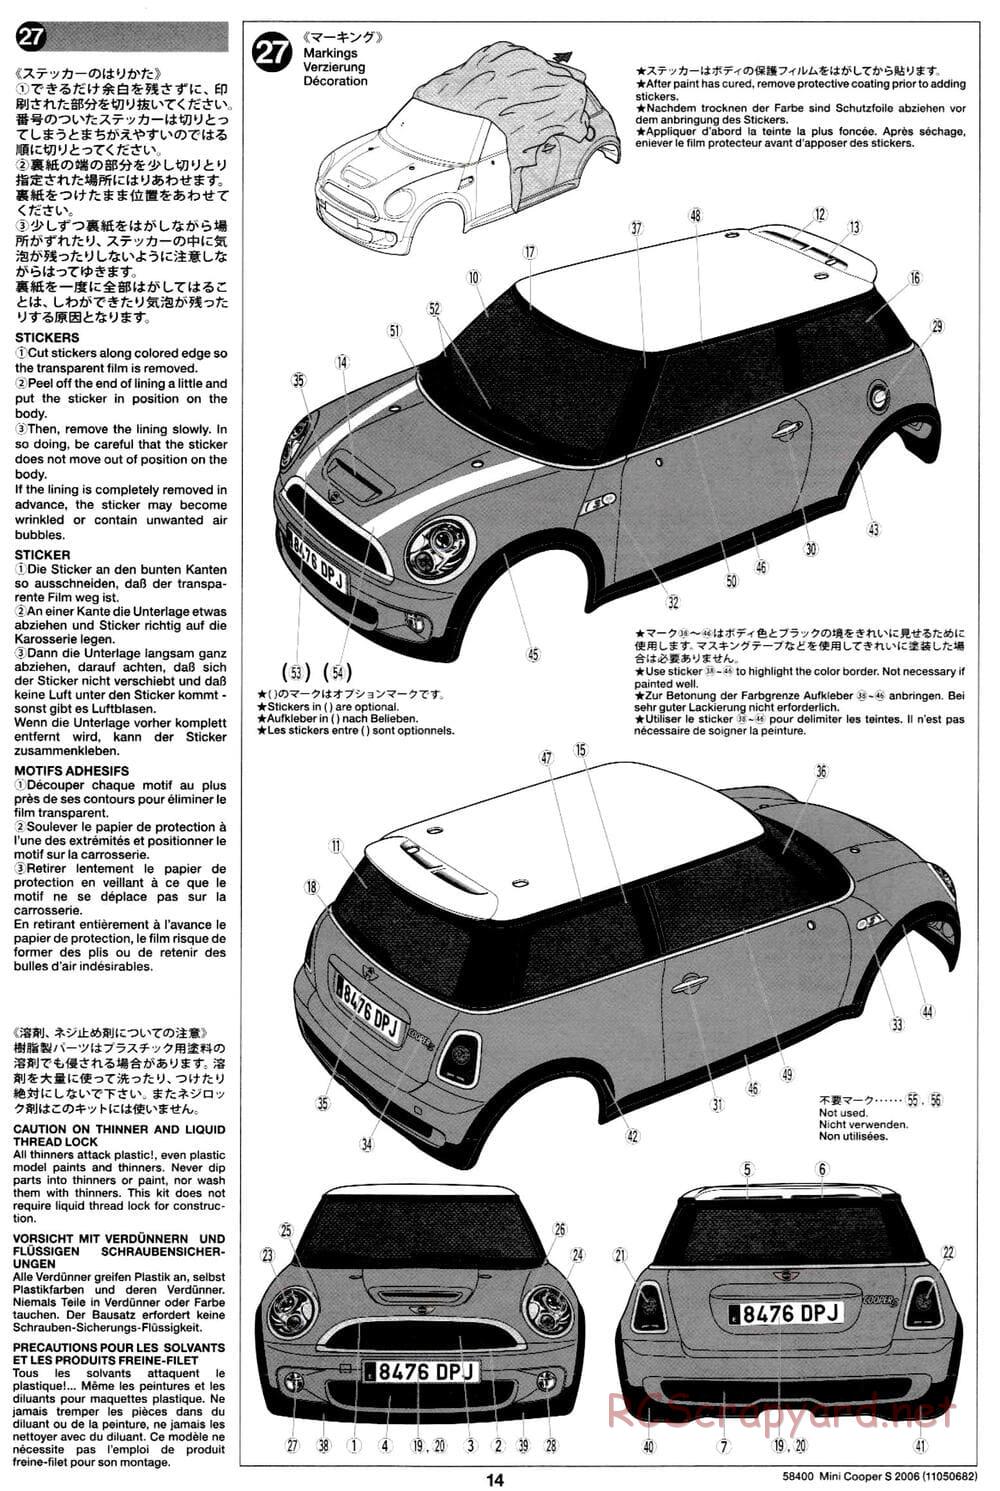 Tamiya - Mini Cooper S 2006 - M03L Chassis - Manual - Page 14